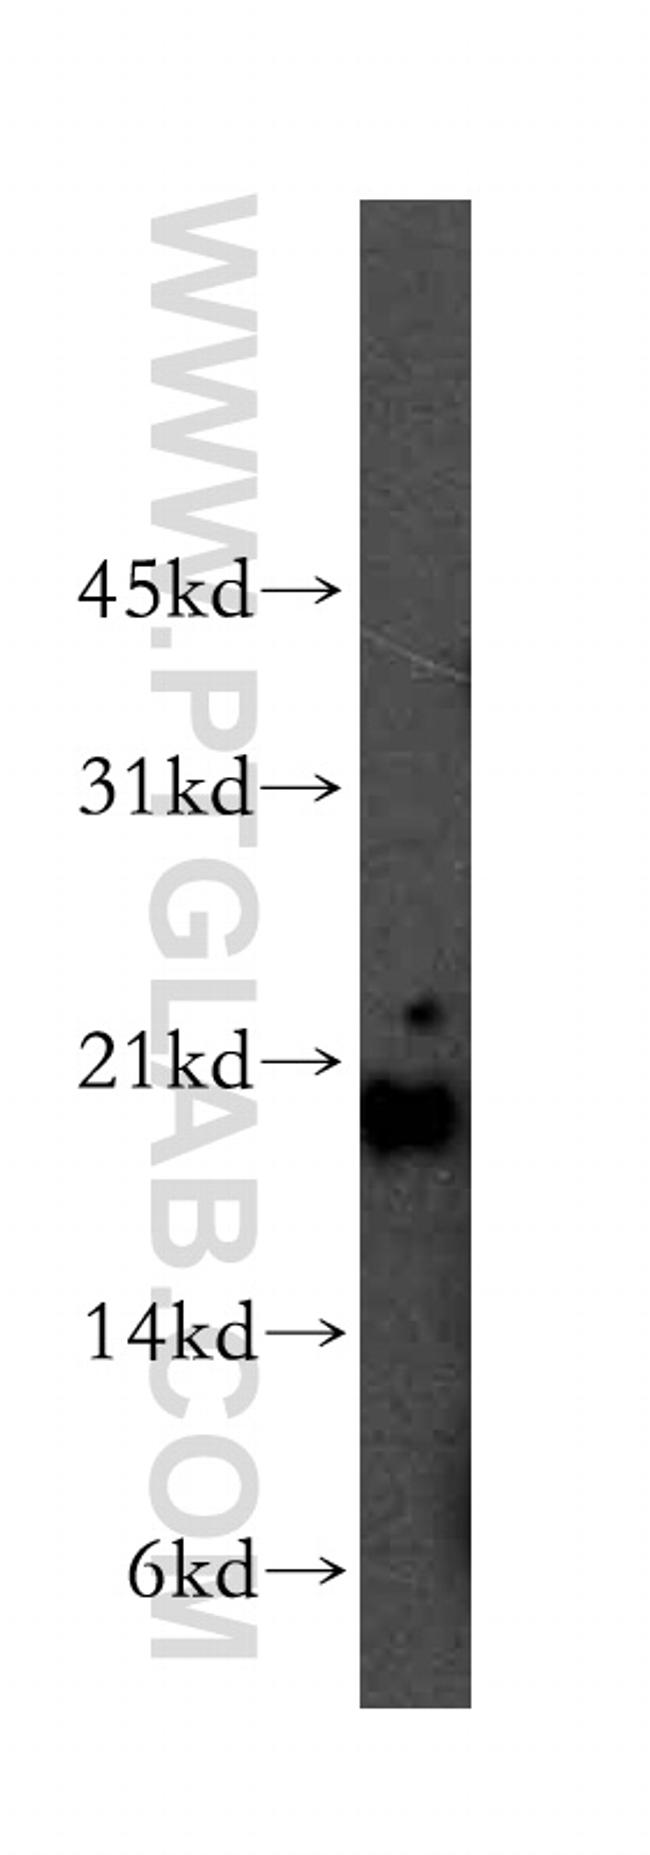 Centrin 1 Antibody in Western Blot (WB)